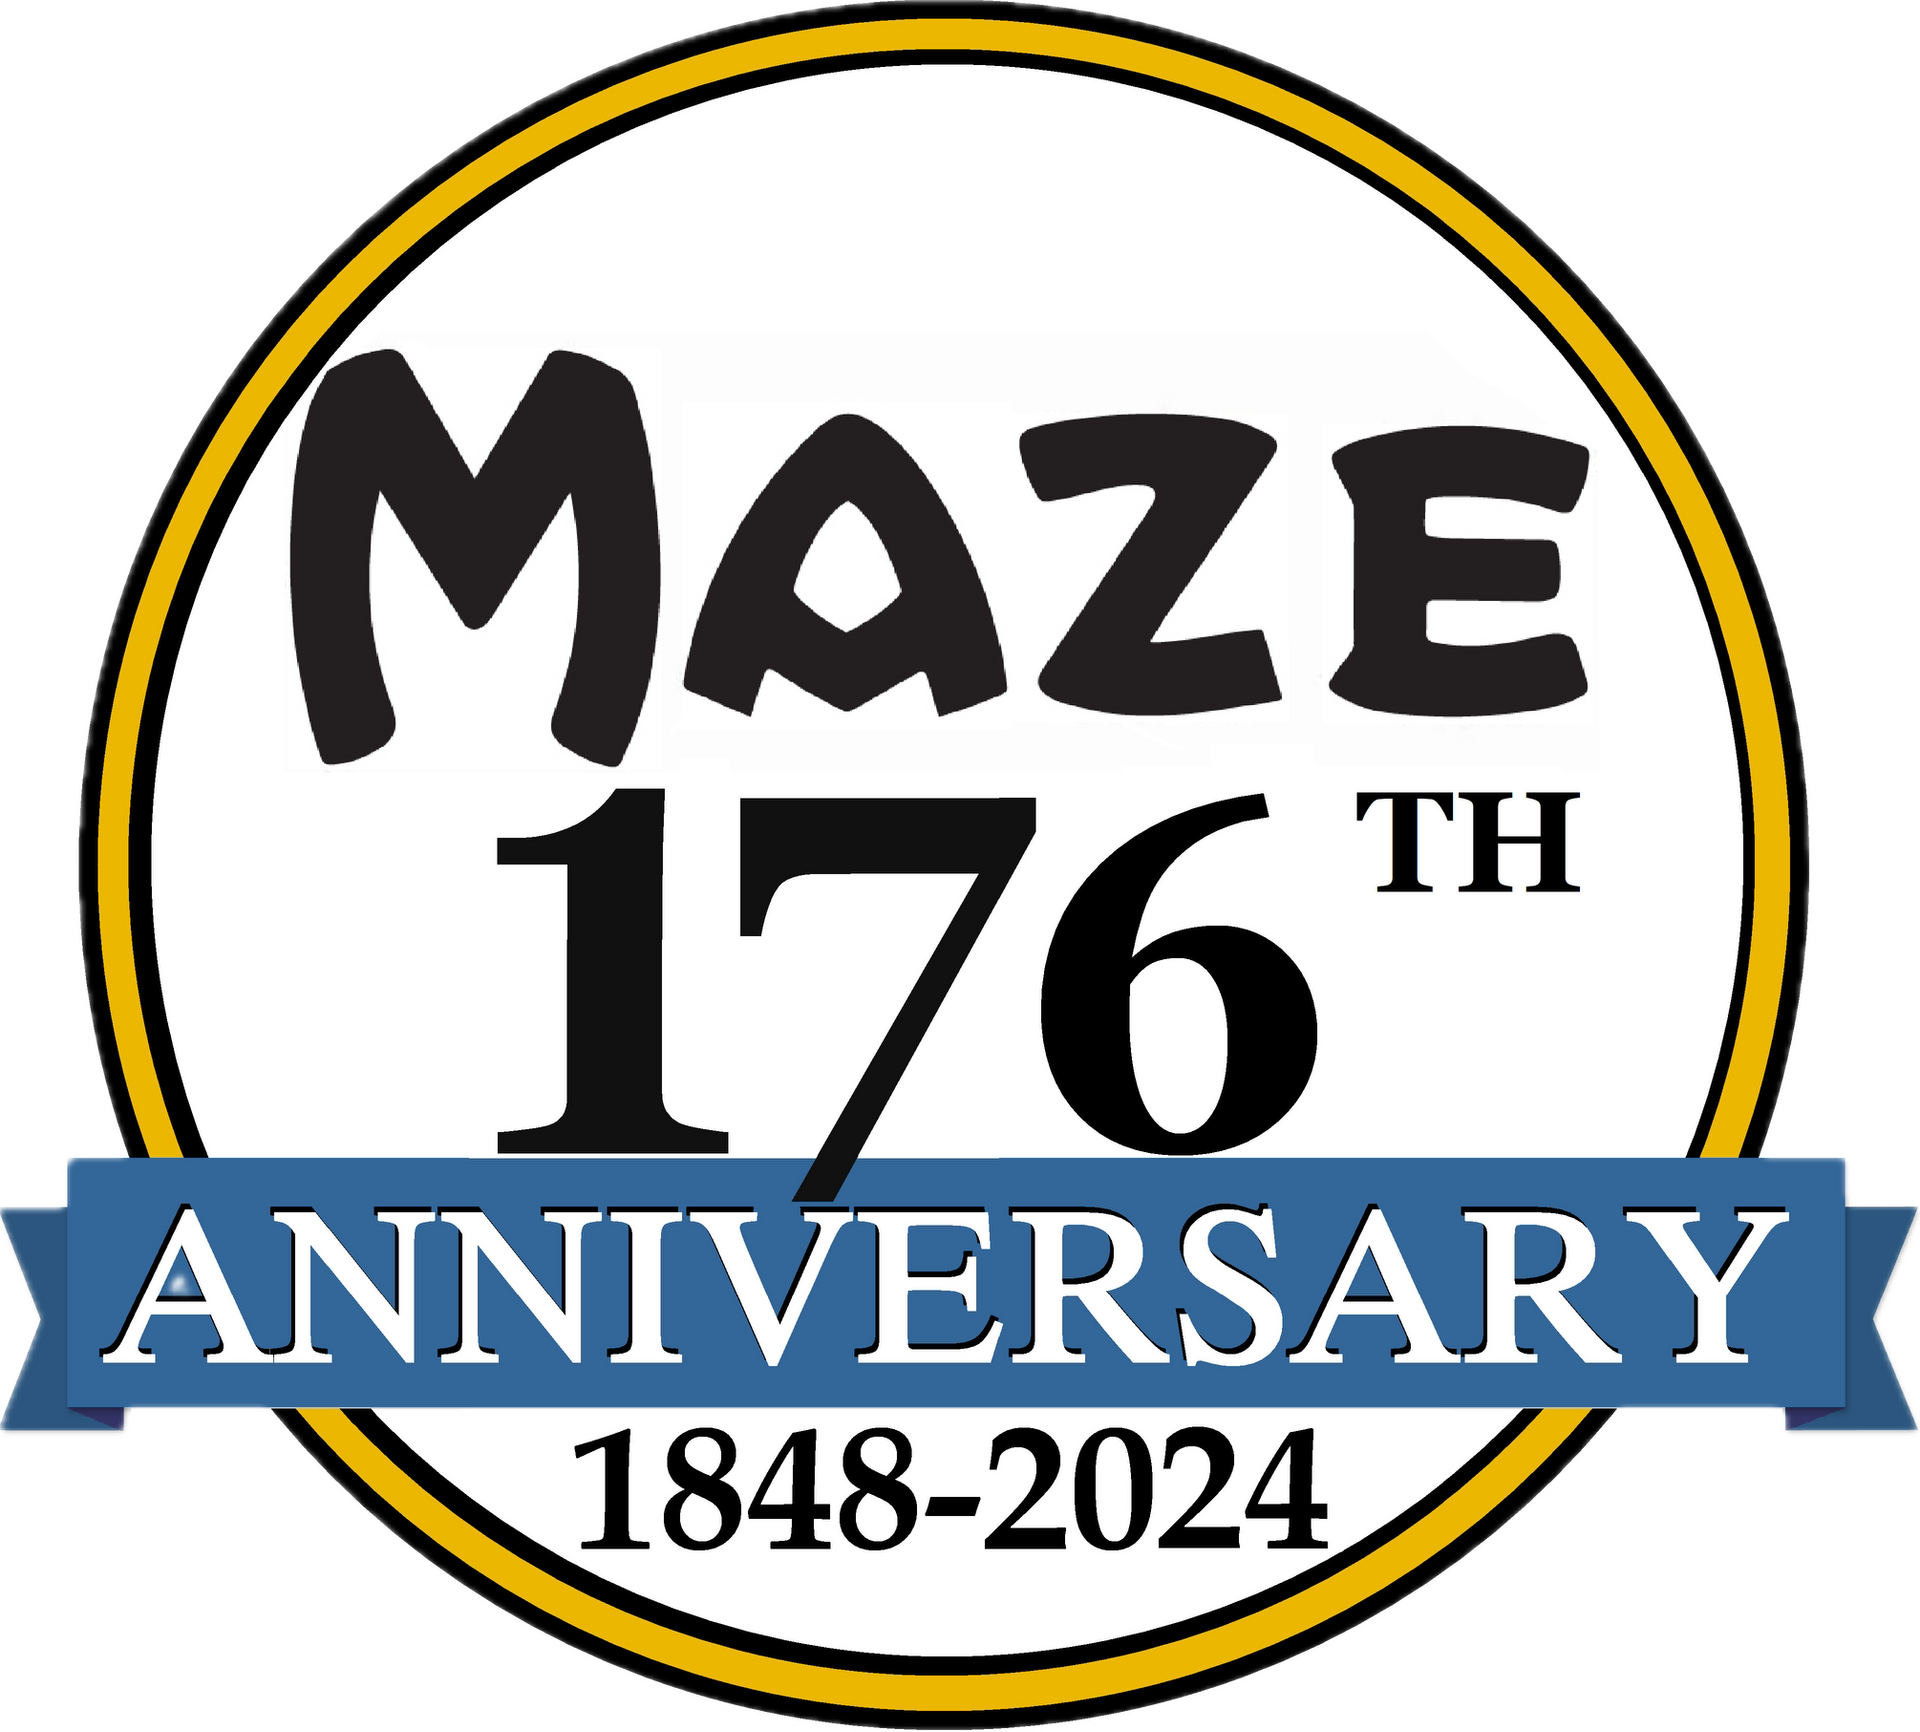 Maze 175th Anniversary logo